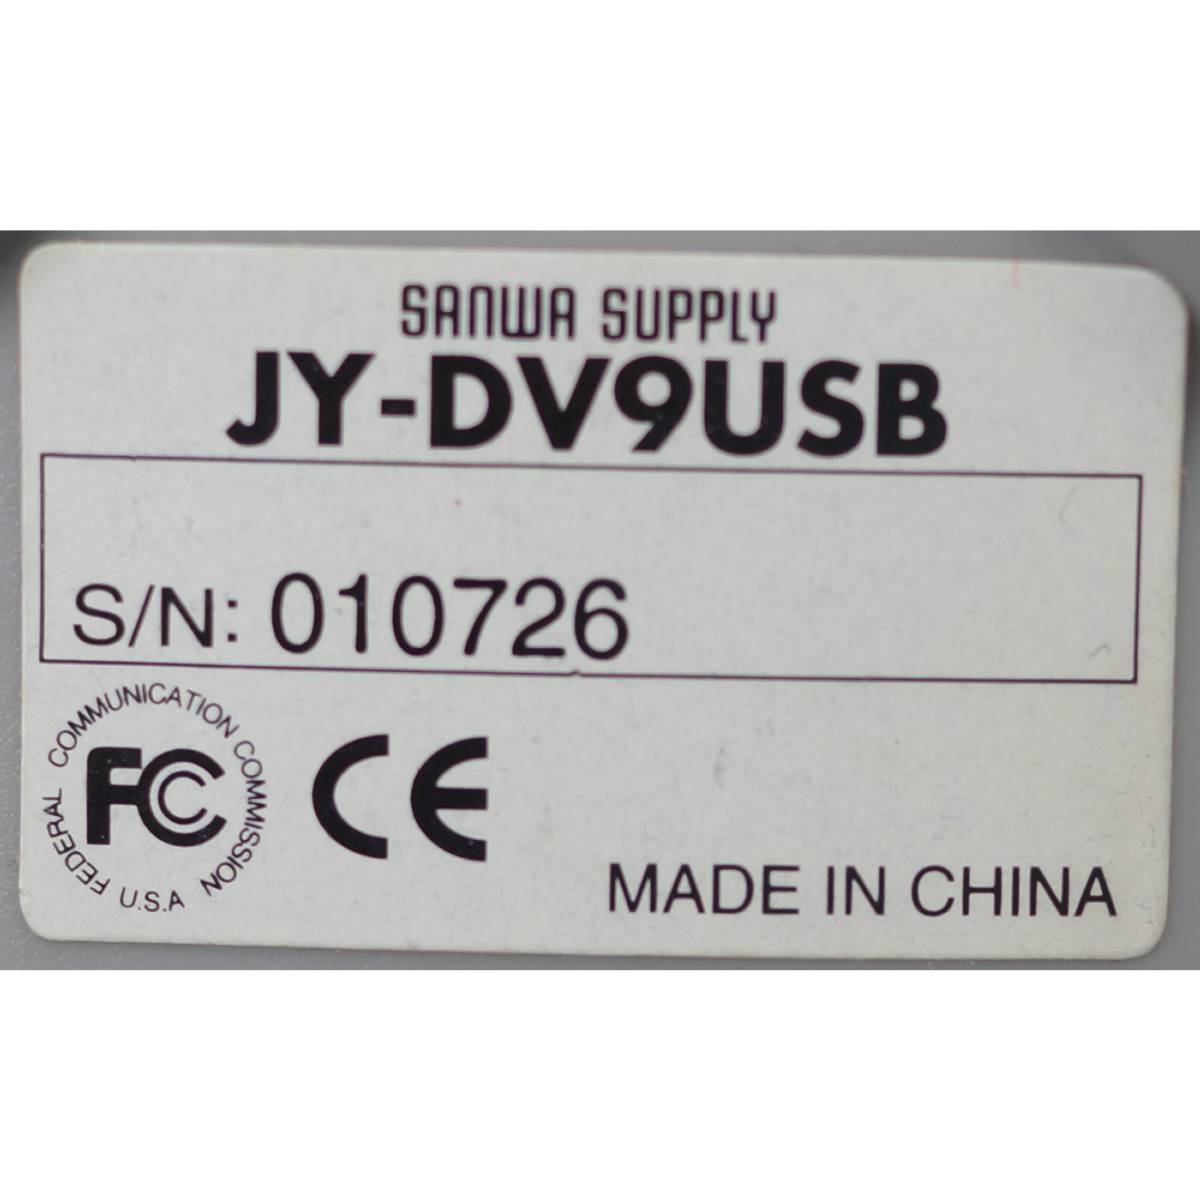  Sanwa Supply береза . рукоятка USB JY-DV9USB